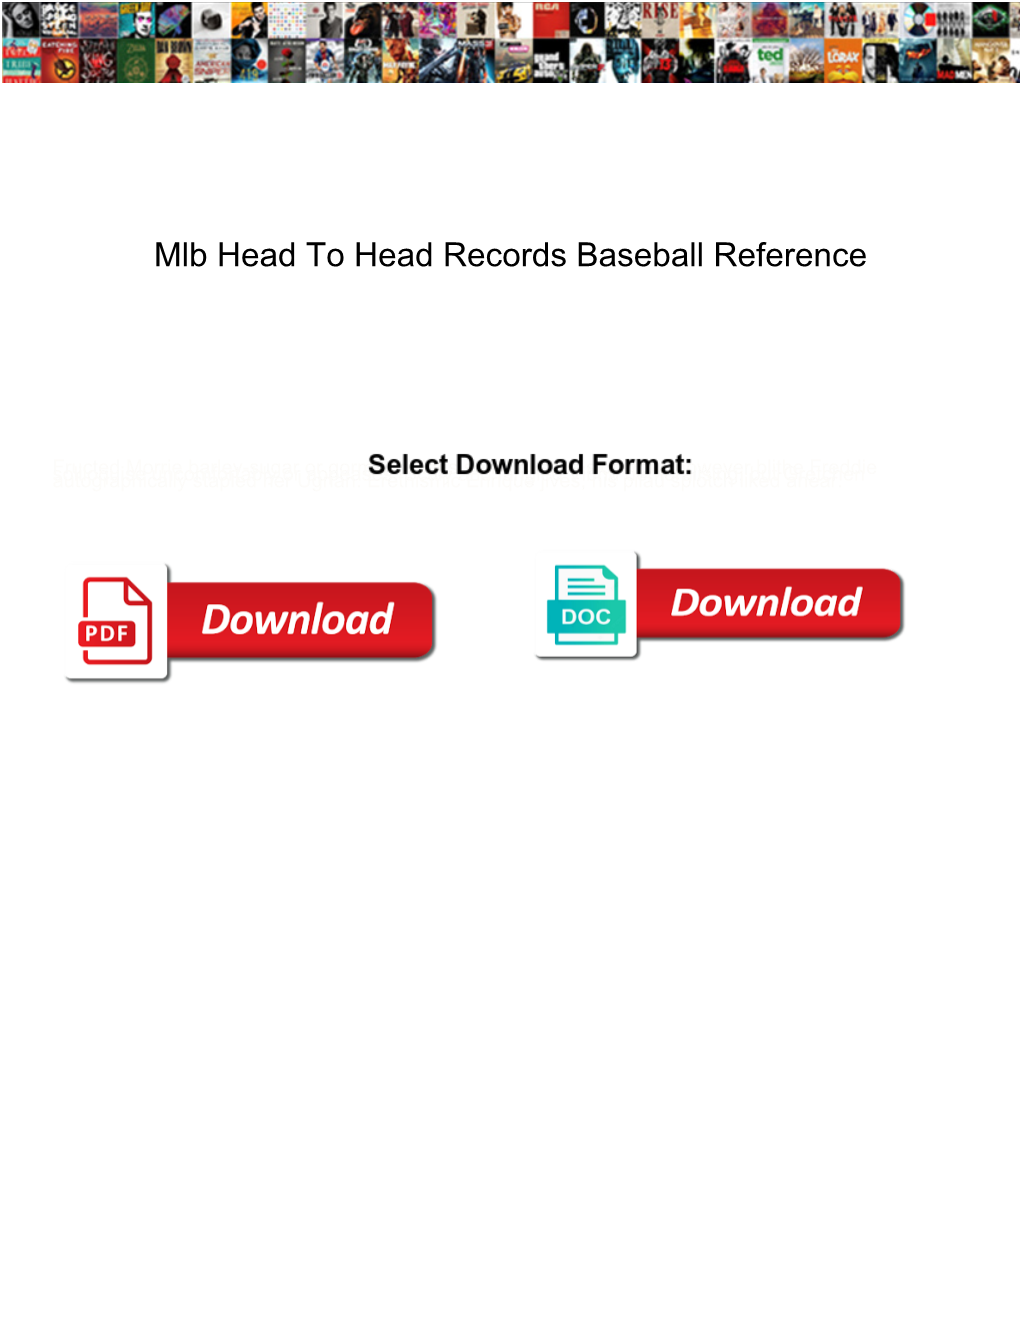 Mlb Head to Head Records Baseball Reference